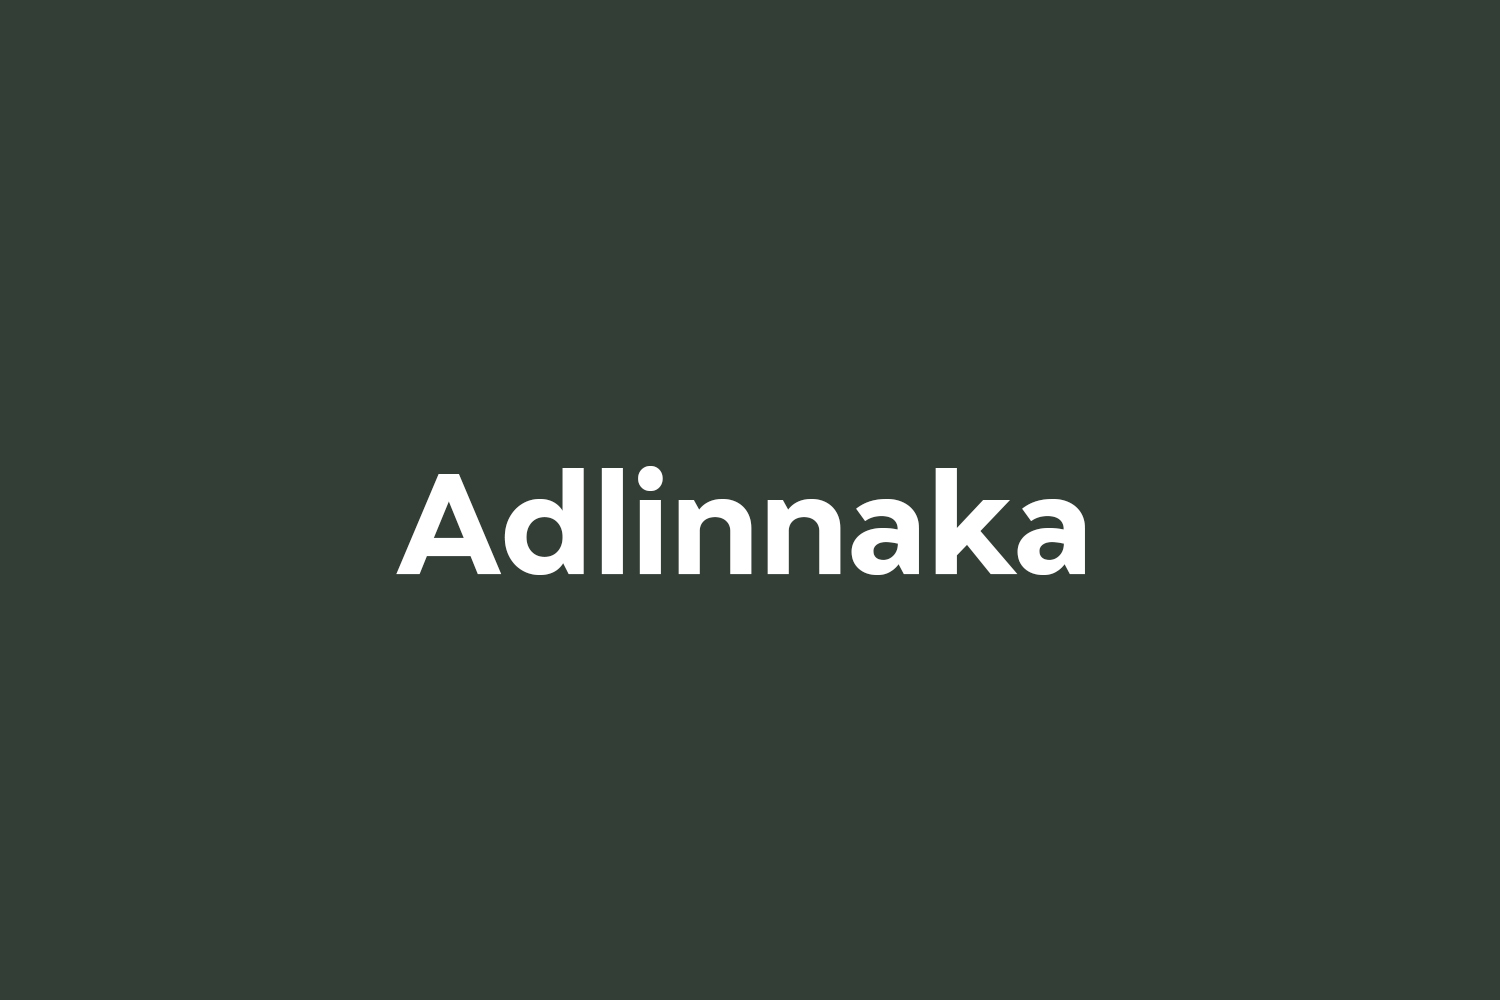 Adlinnaka Free Font